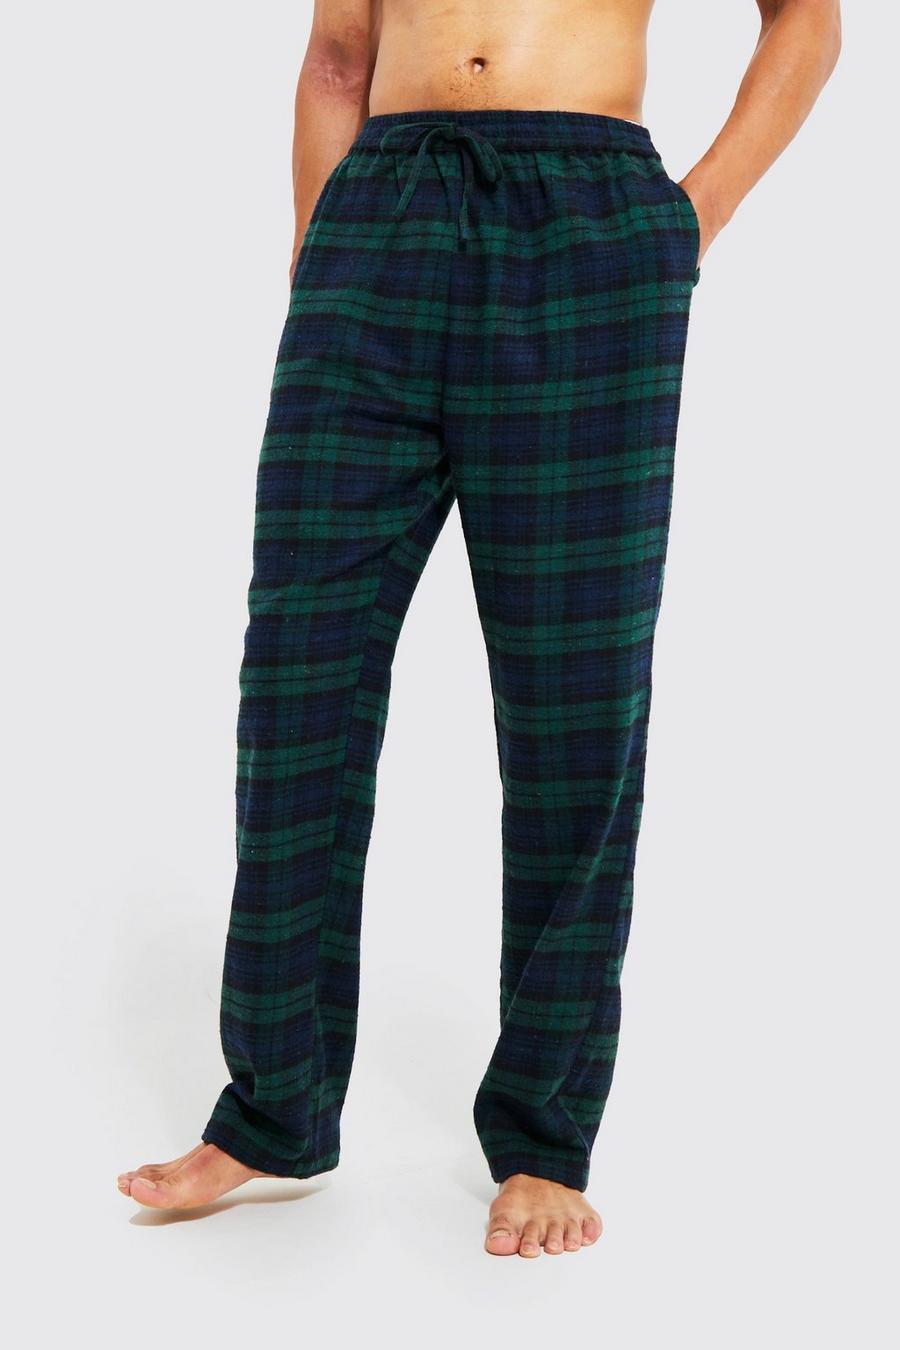 Green Tall Woven Check Loungewear Pants